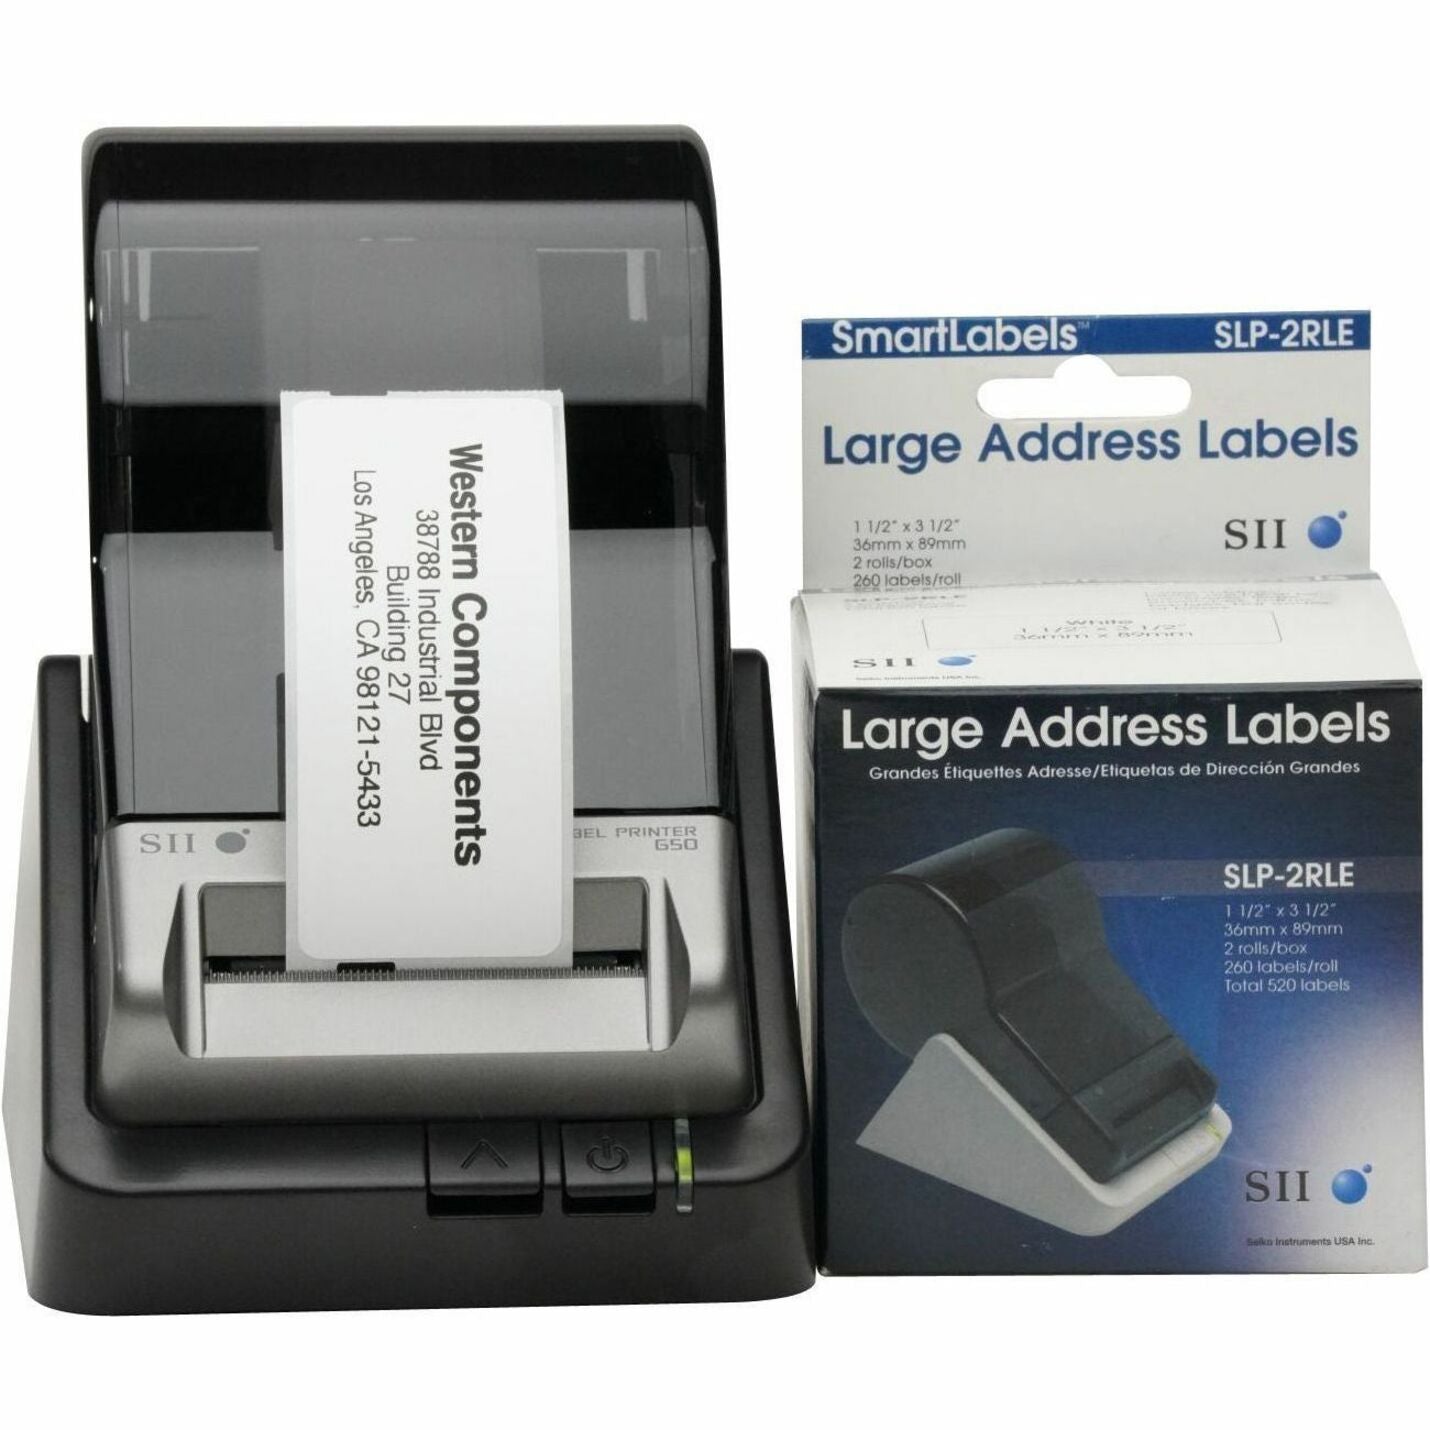 Seiko SLP-2RLE SmartLabel Printer Large Address Labels, 1-1/2"x3-1/2", 260 Labels per Roll